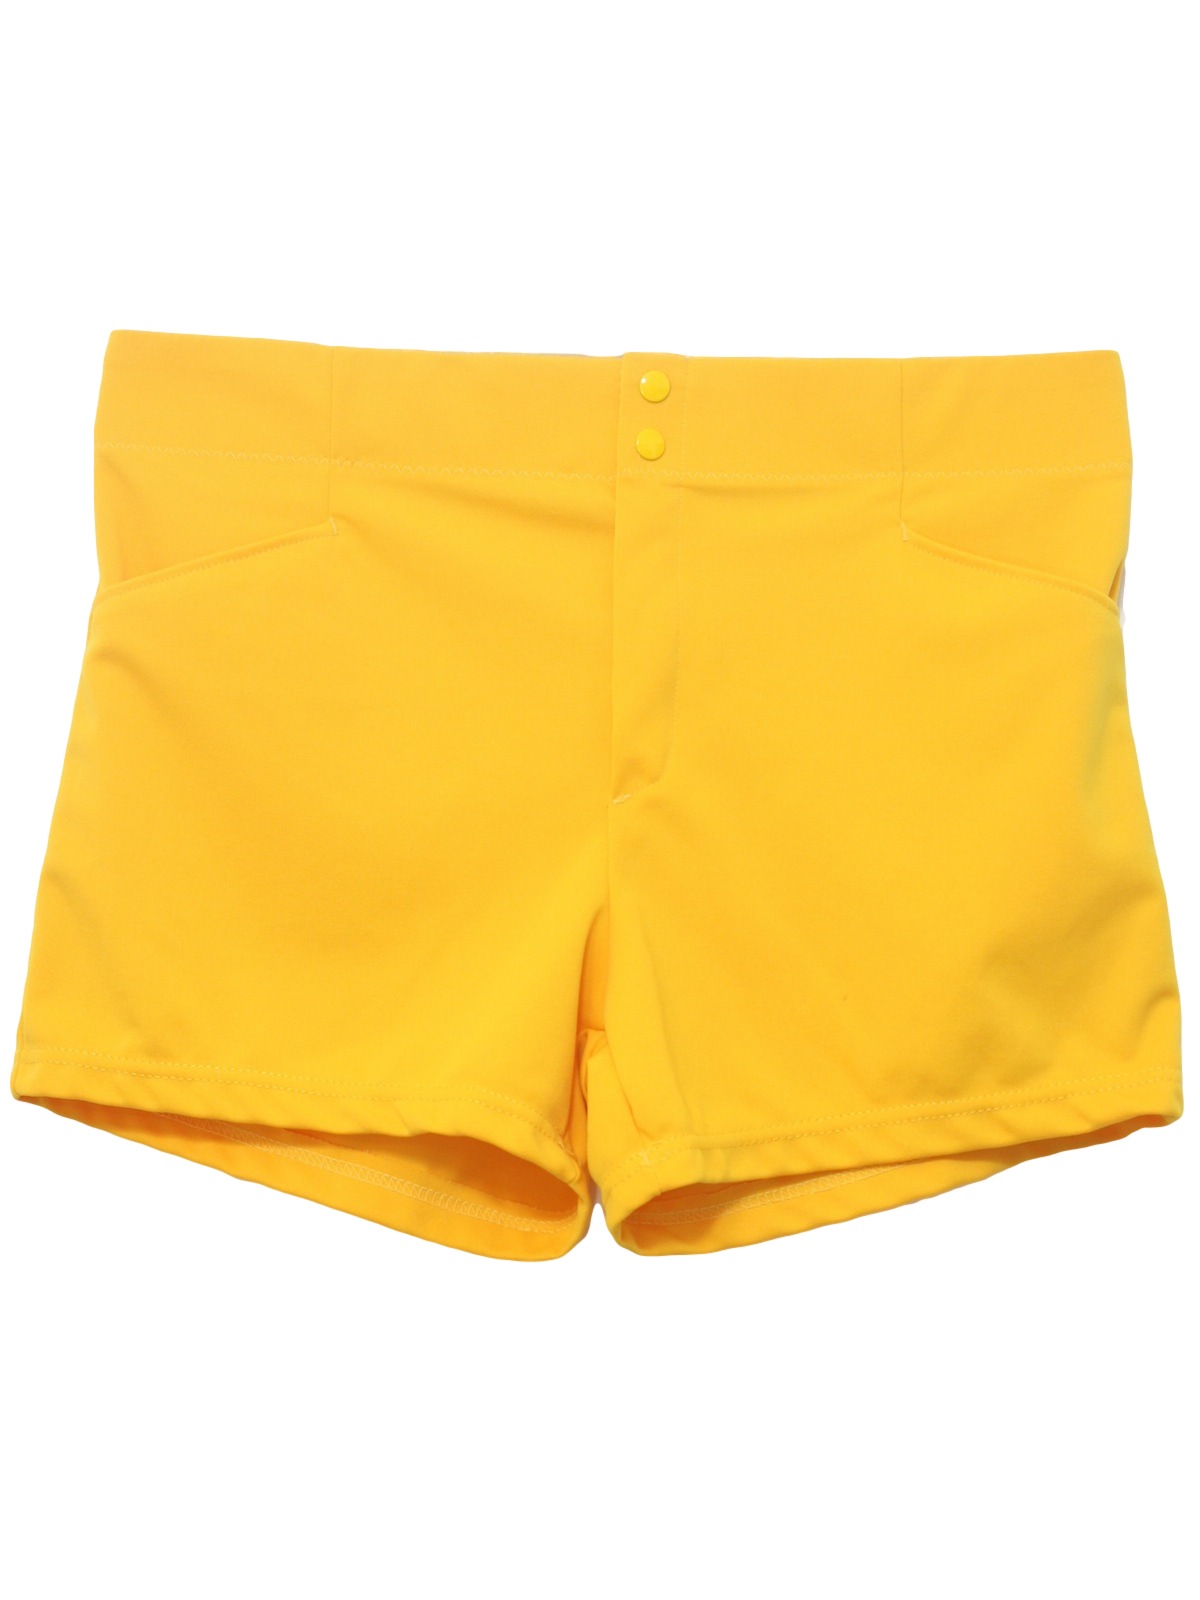 90's Bike Shorts: 90s -Bike- Mens yellow background stretch nylon ...